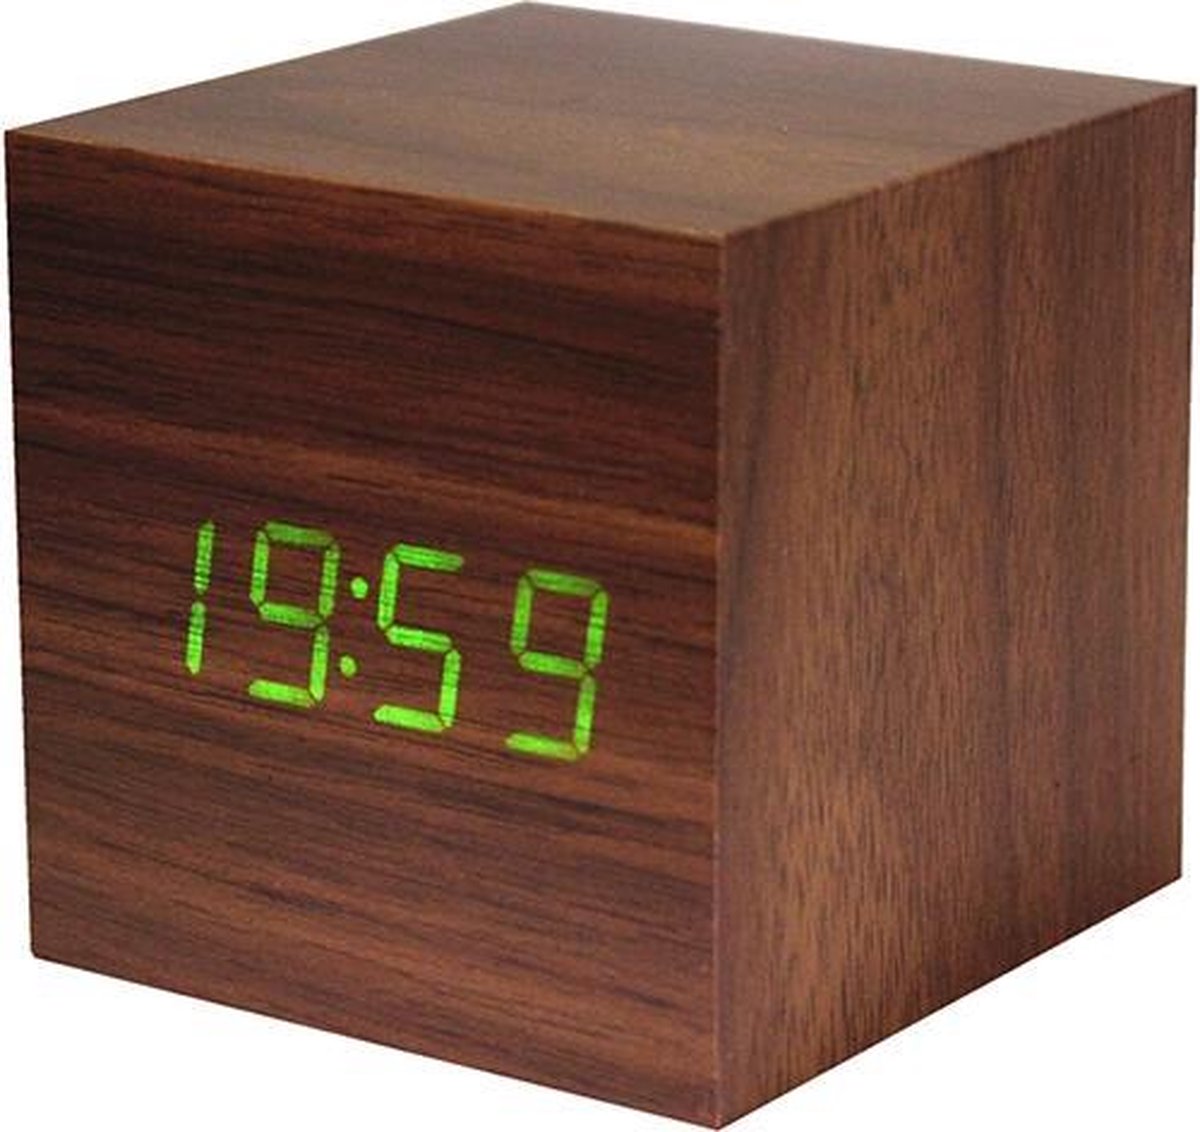 neef kleinhandel Vertrouwelijk Gingko Wekker - Alarmklok Cube Click Clock walnoot - groene LED | bol.com